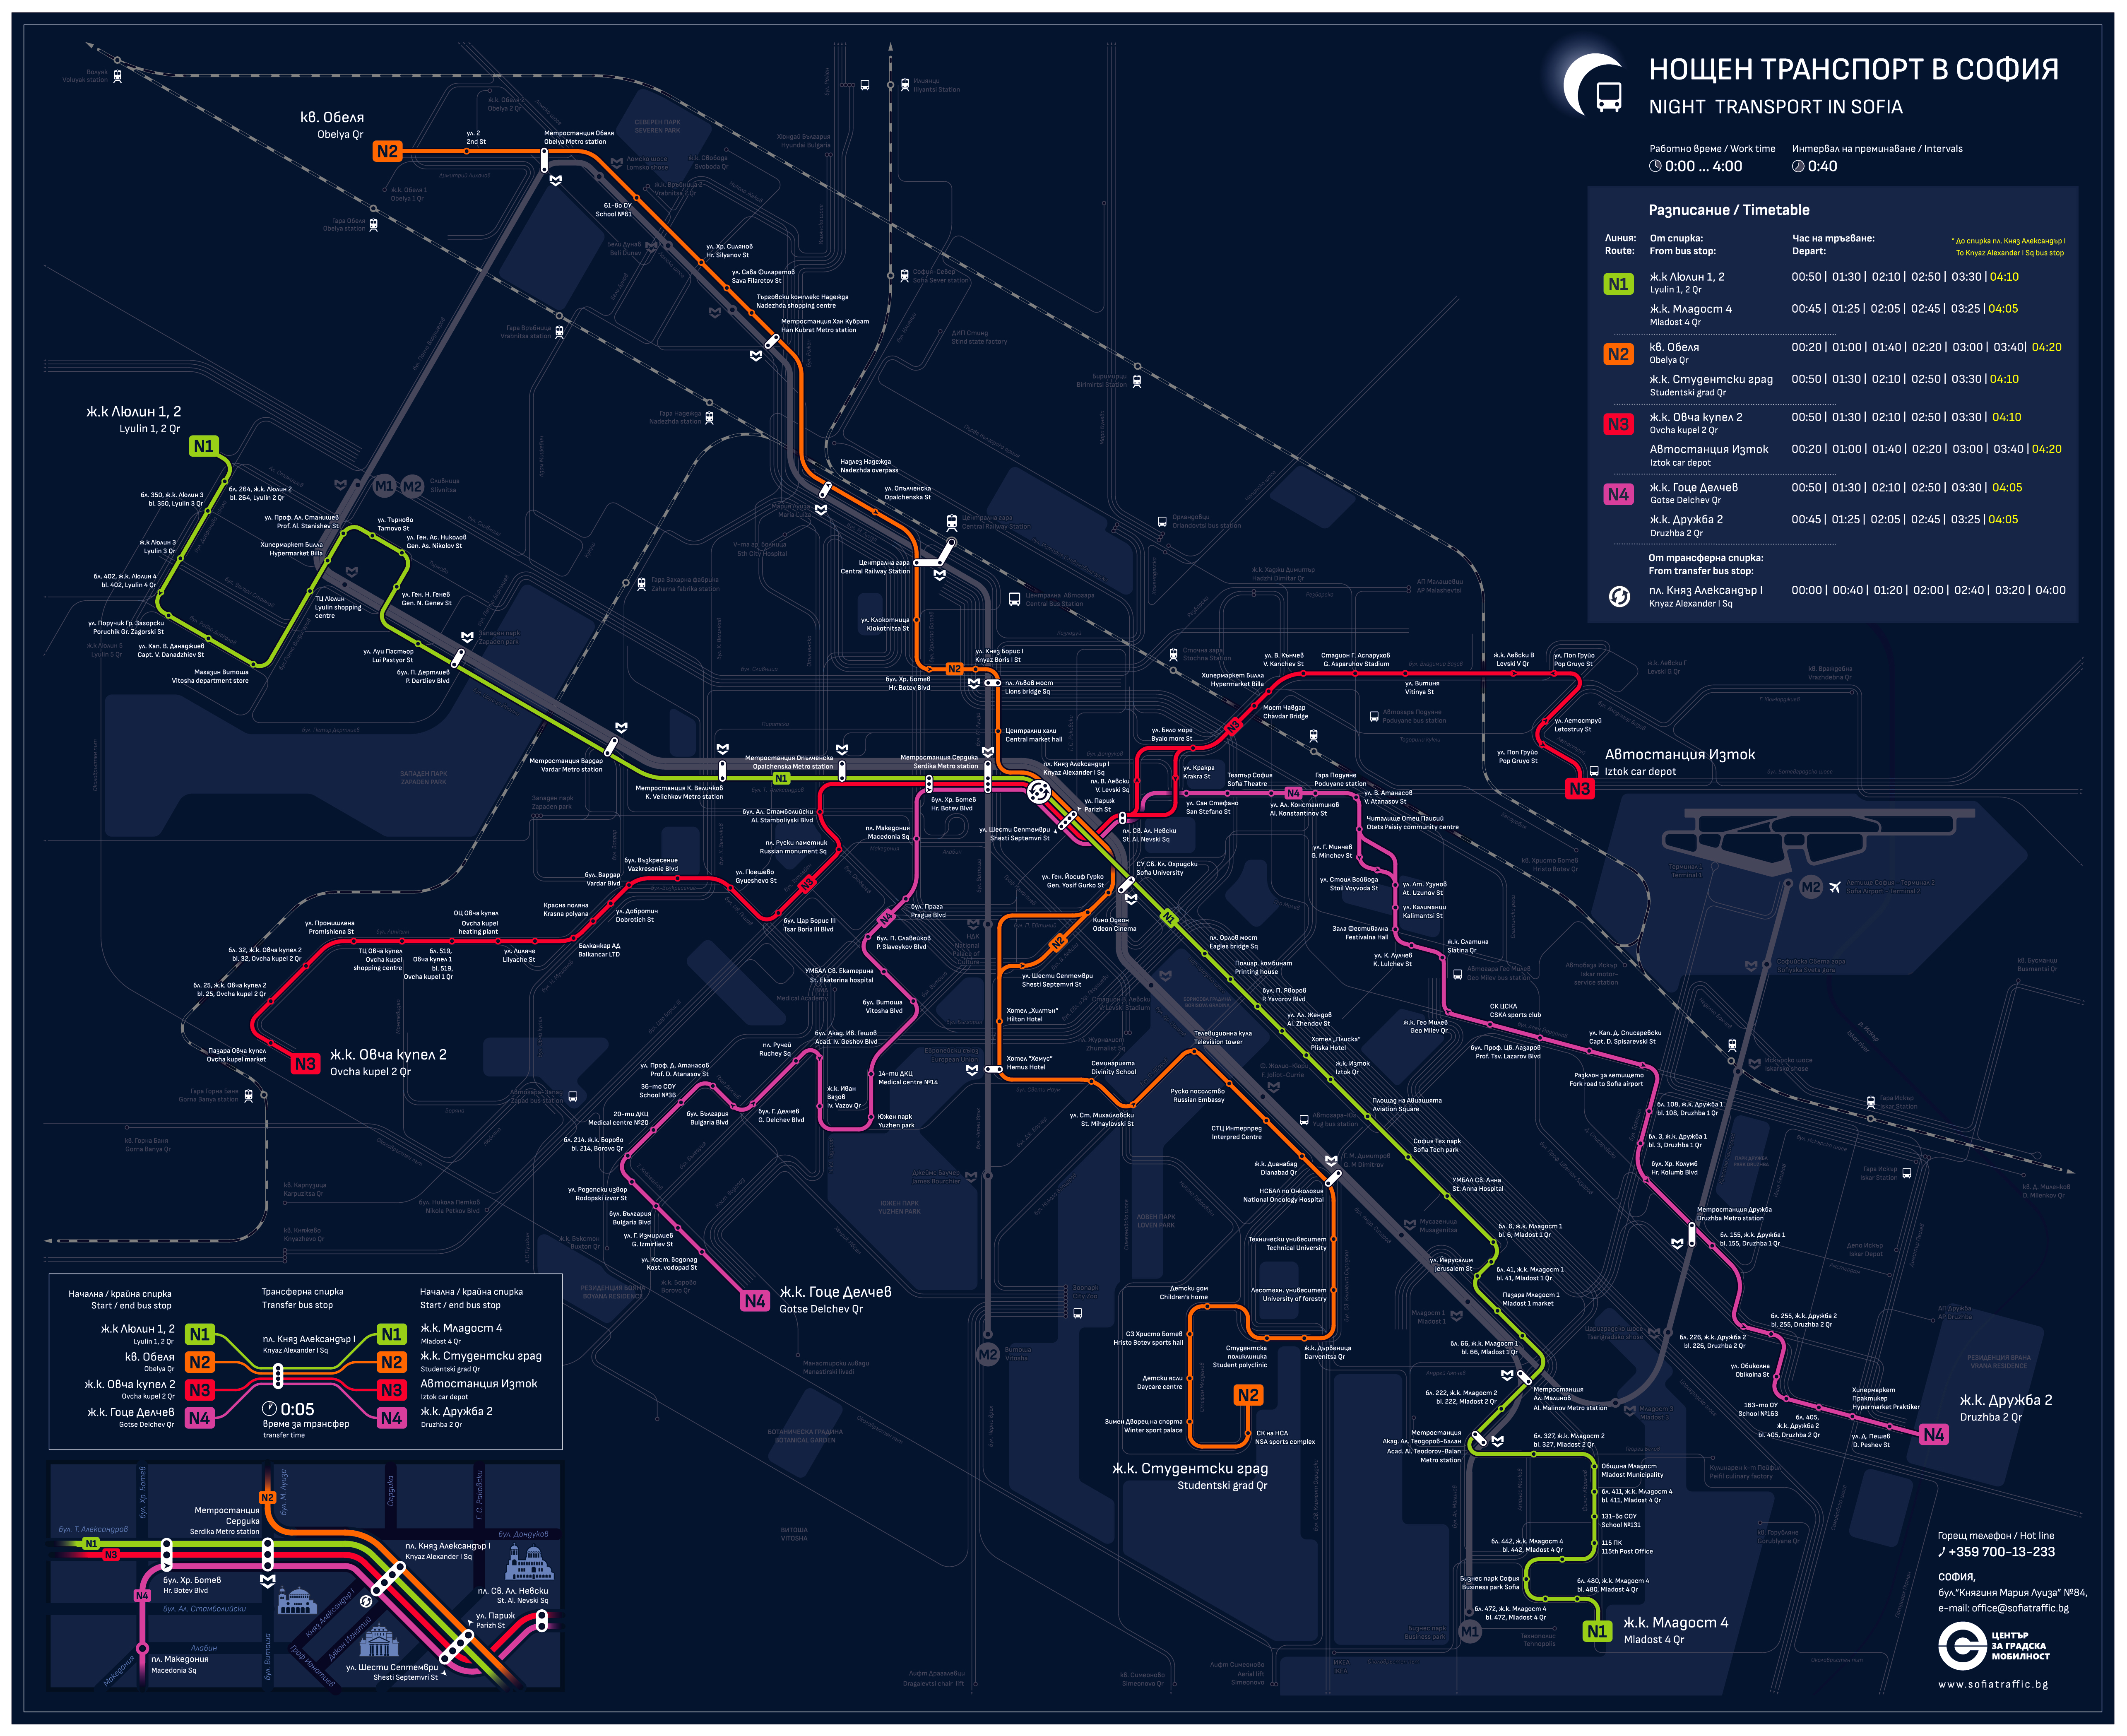 Sofia Night Transport Map